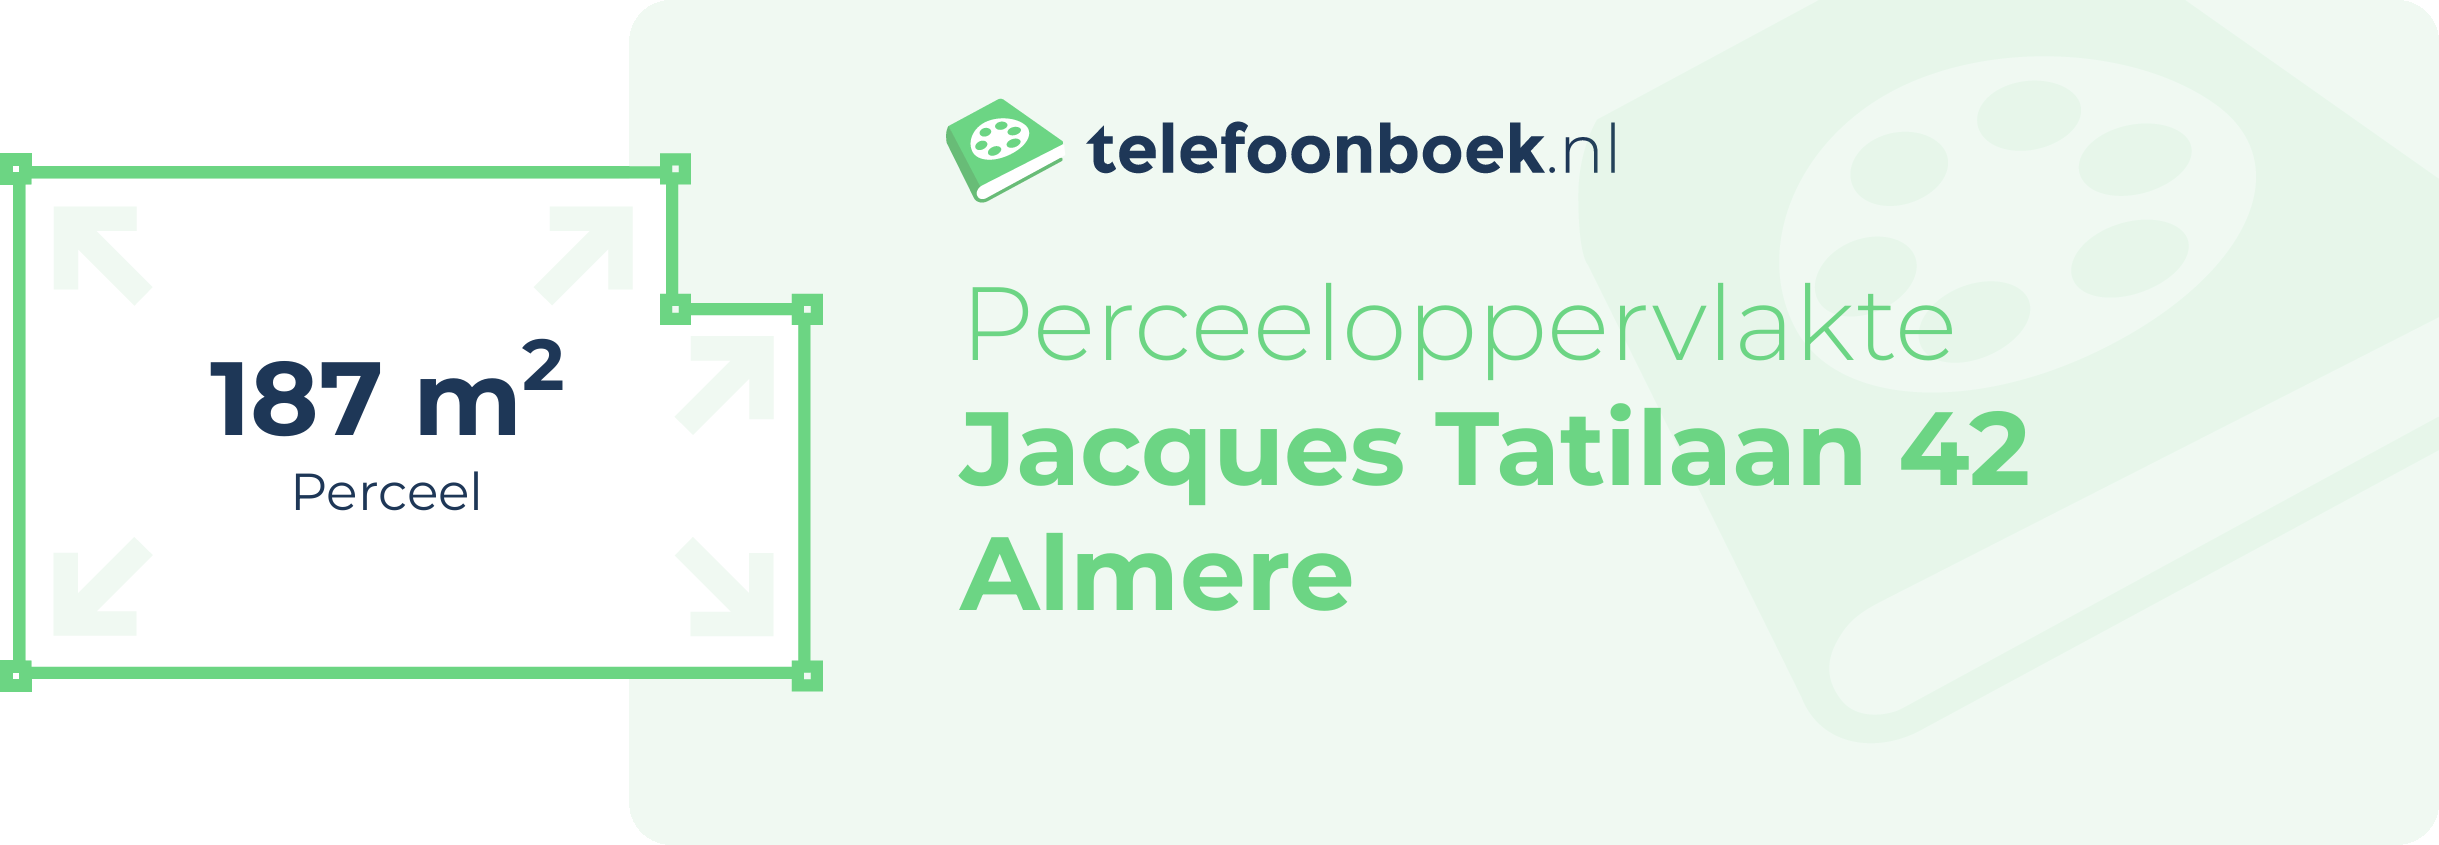 Perceeloppervlakte Jacques Tatilaan 42 Almere